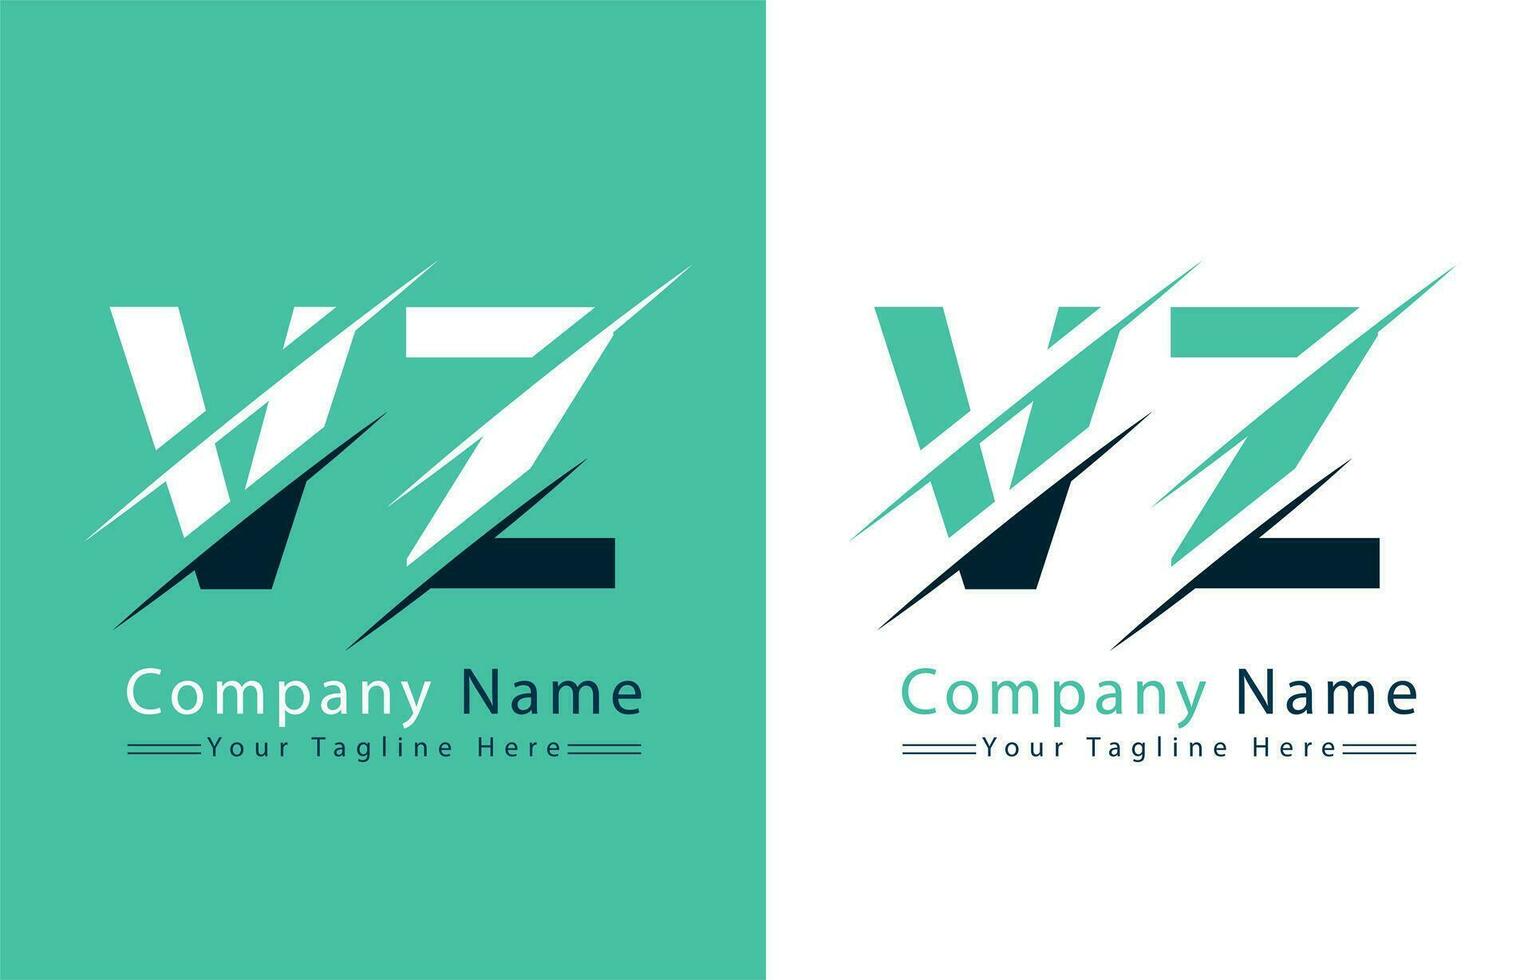 vz brev logotyp design begrepp. vektor logotyp illustration